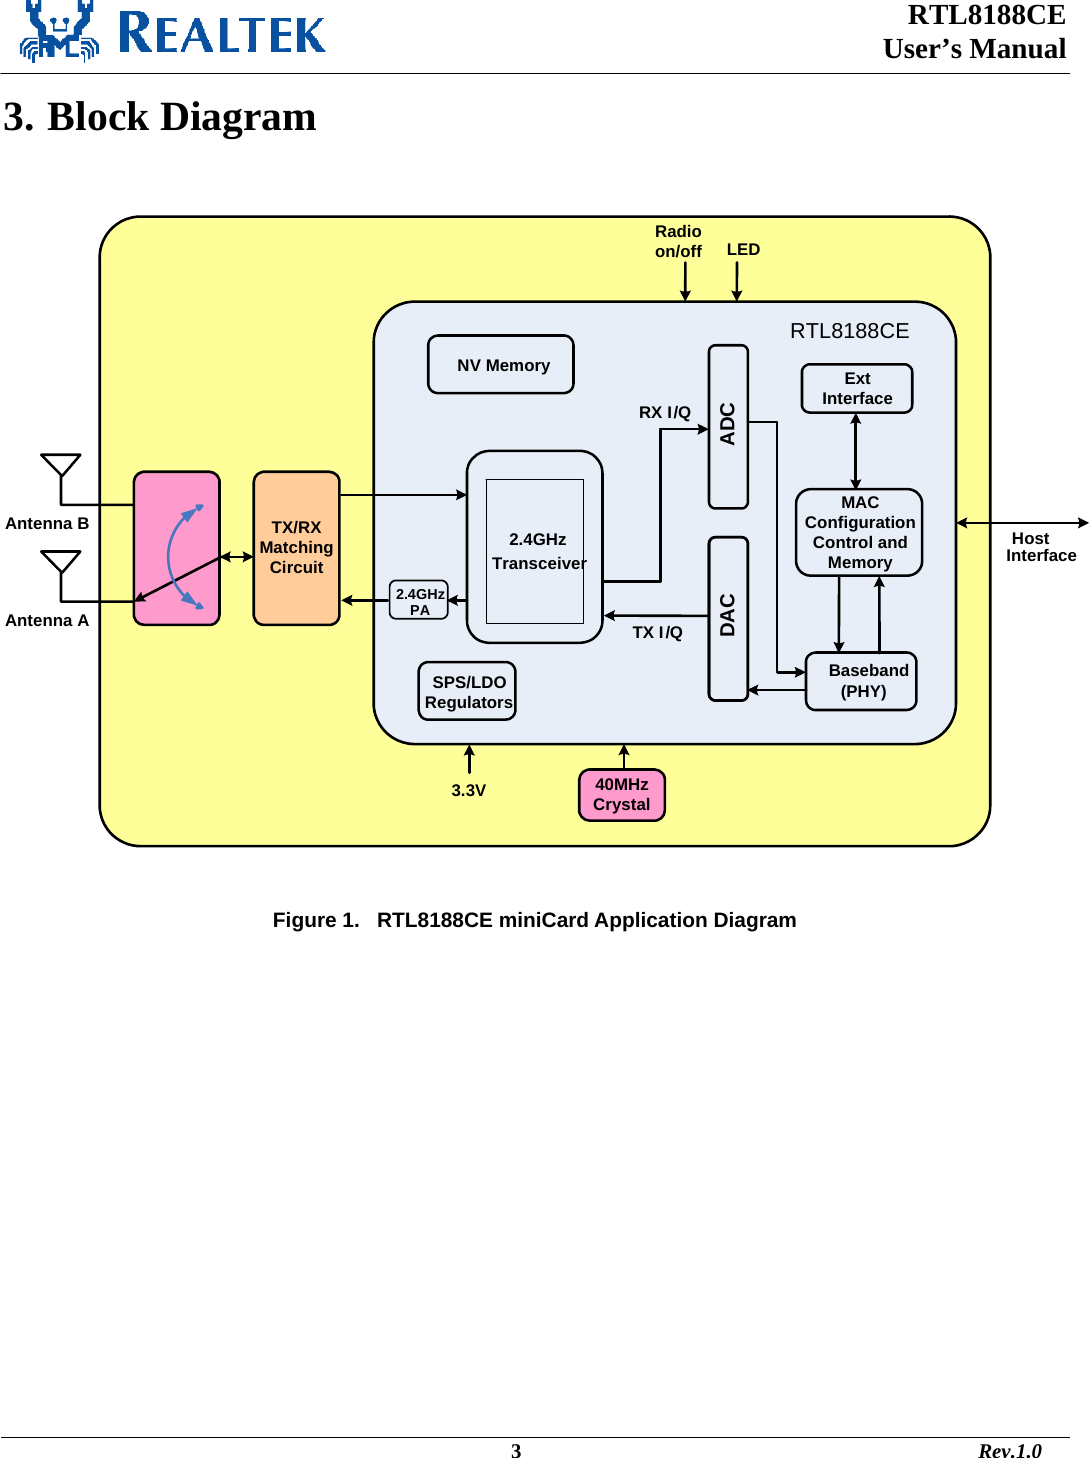  RTL8188CE  User’s Manual    3. Block Diagram   Antenna B 2.4GHz PA2.4GHzTransceiverTX I/QNV MemoryADCDACSPS/LDORegulators40MHzCrystalMACConfigurationControl andMemoryExt InterfaceBaseband(PHY)RTL8188CEHostInterface3.3VRX I/QAntenna A LEDRadio on/off40MHz CrystalTX/RX Matching Circuit  Figure 1.   RTL8188CE miniCard Application Diagram                                                                                             3                                                                                       Rev.1.0 